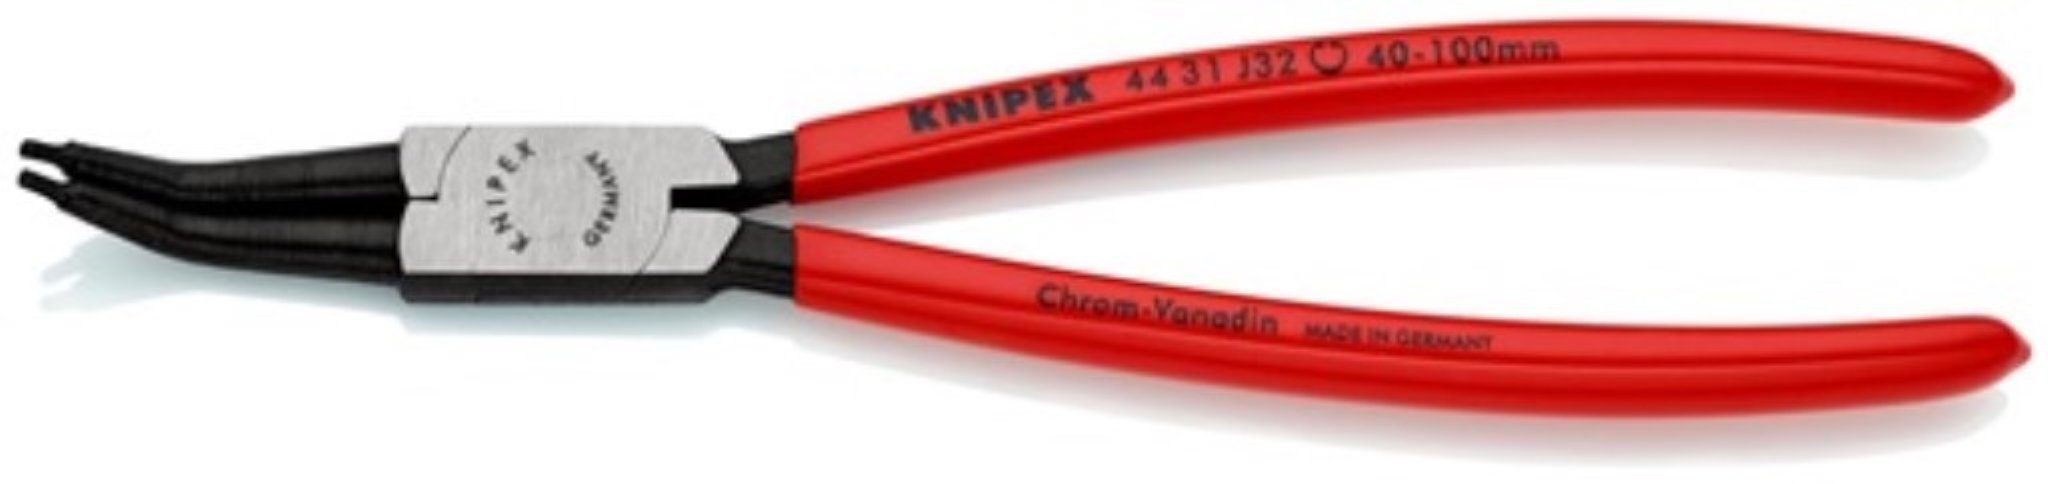 KNIPEX Sicherungsringzange für f.Bohrungen Knipex D.40-100mm Sicherungsring 32 J Innenringe